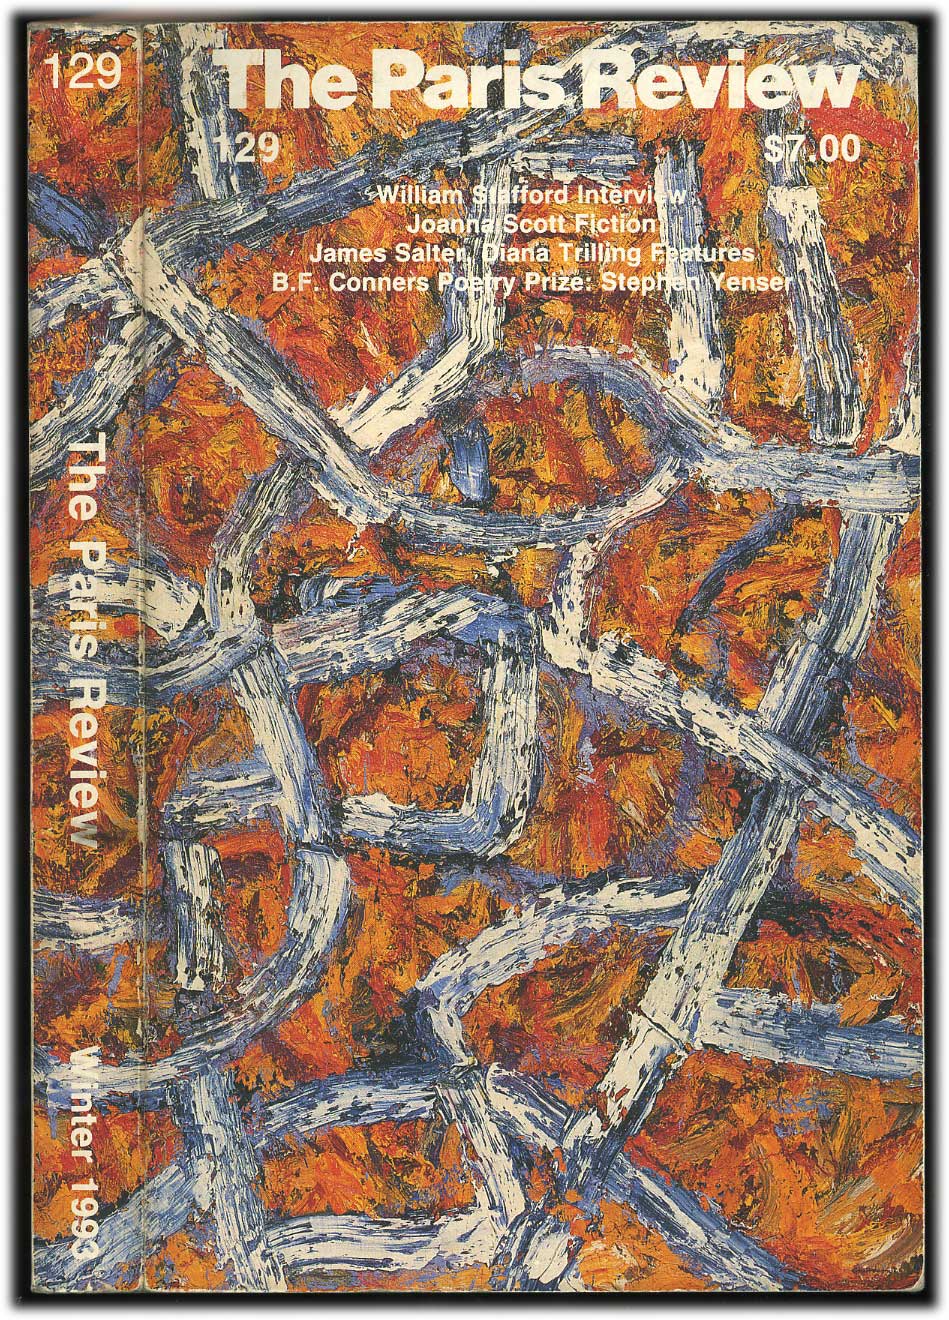 1993 Paris Review cover